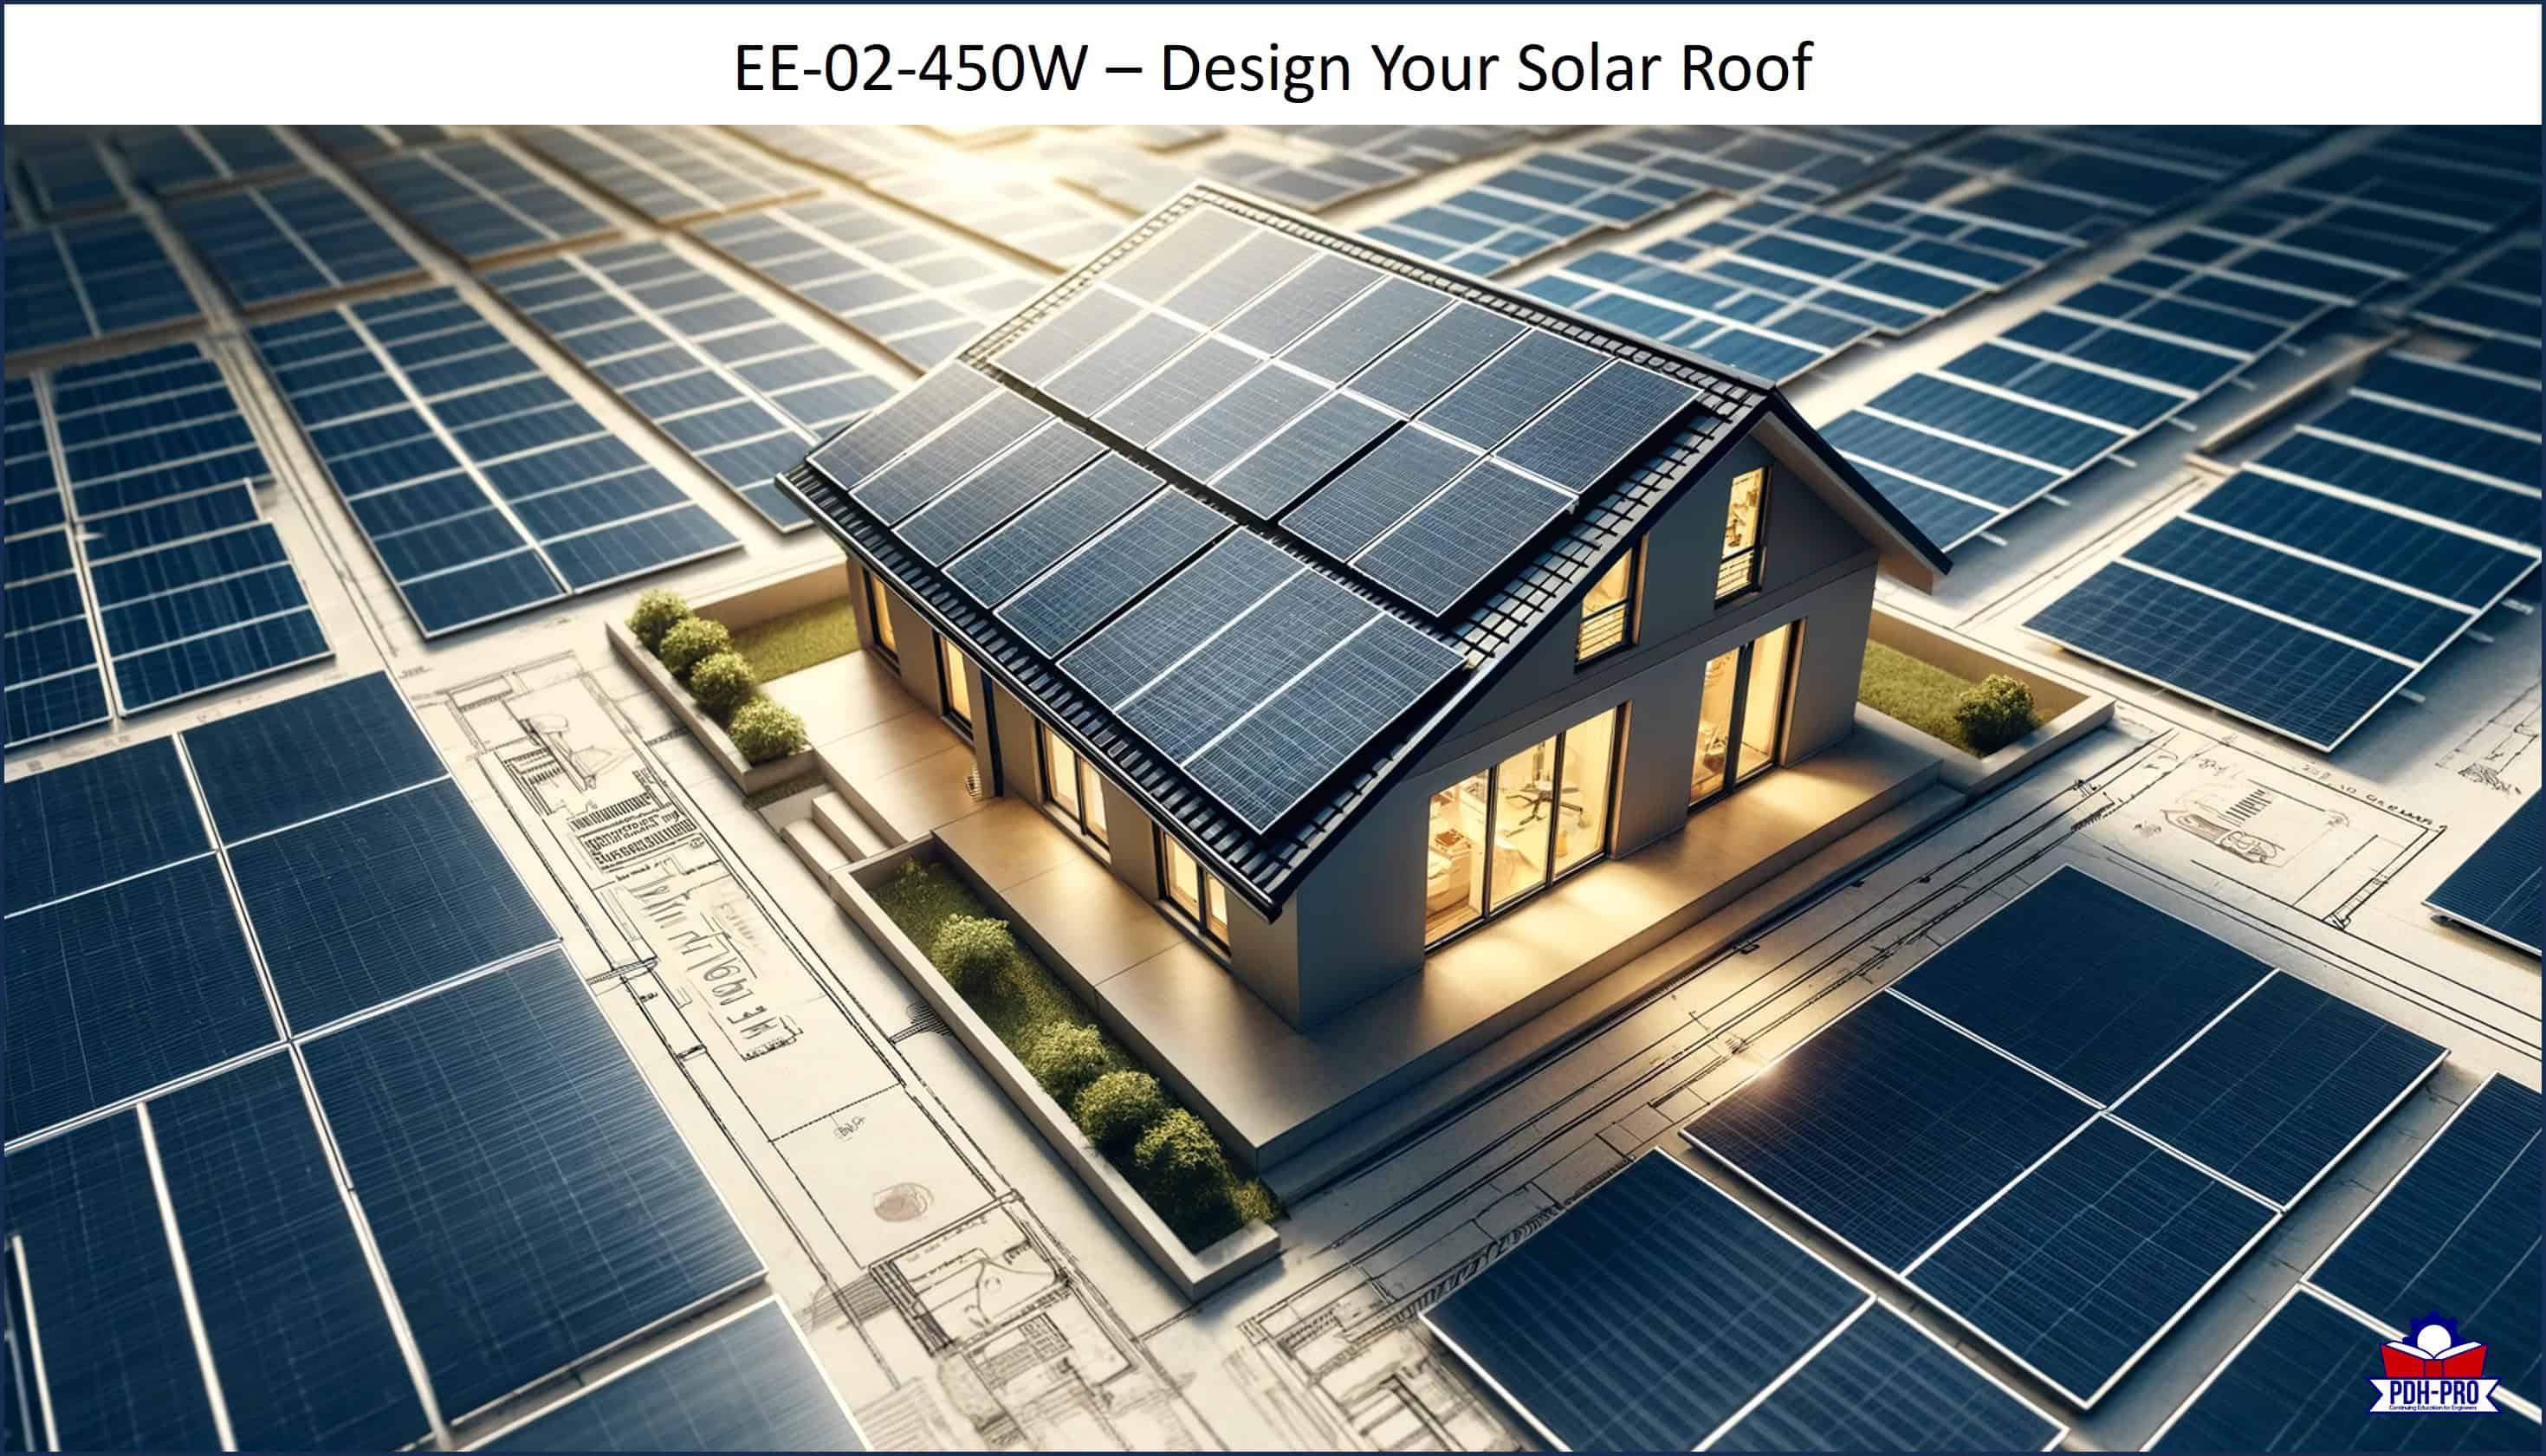 Design Your Solar Roof